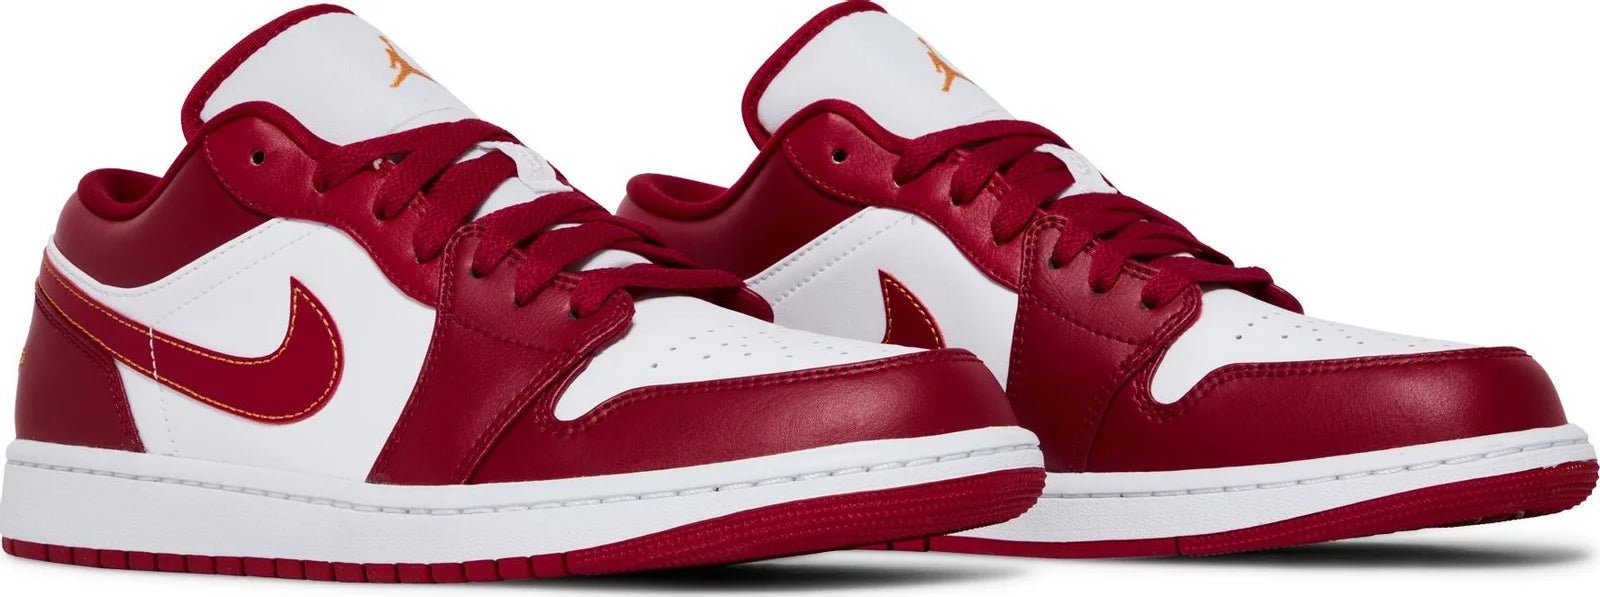 Air Jordan 1 Low Cardinal Red - Paroissesaintefoy Sneakers Sale Online